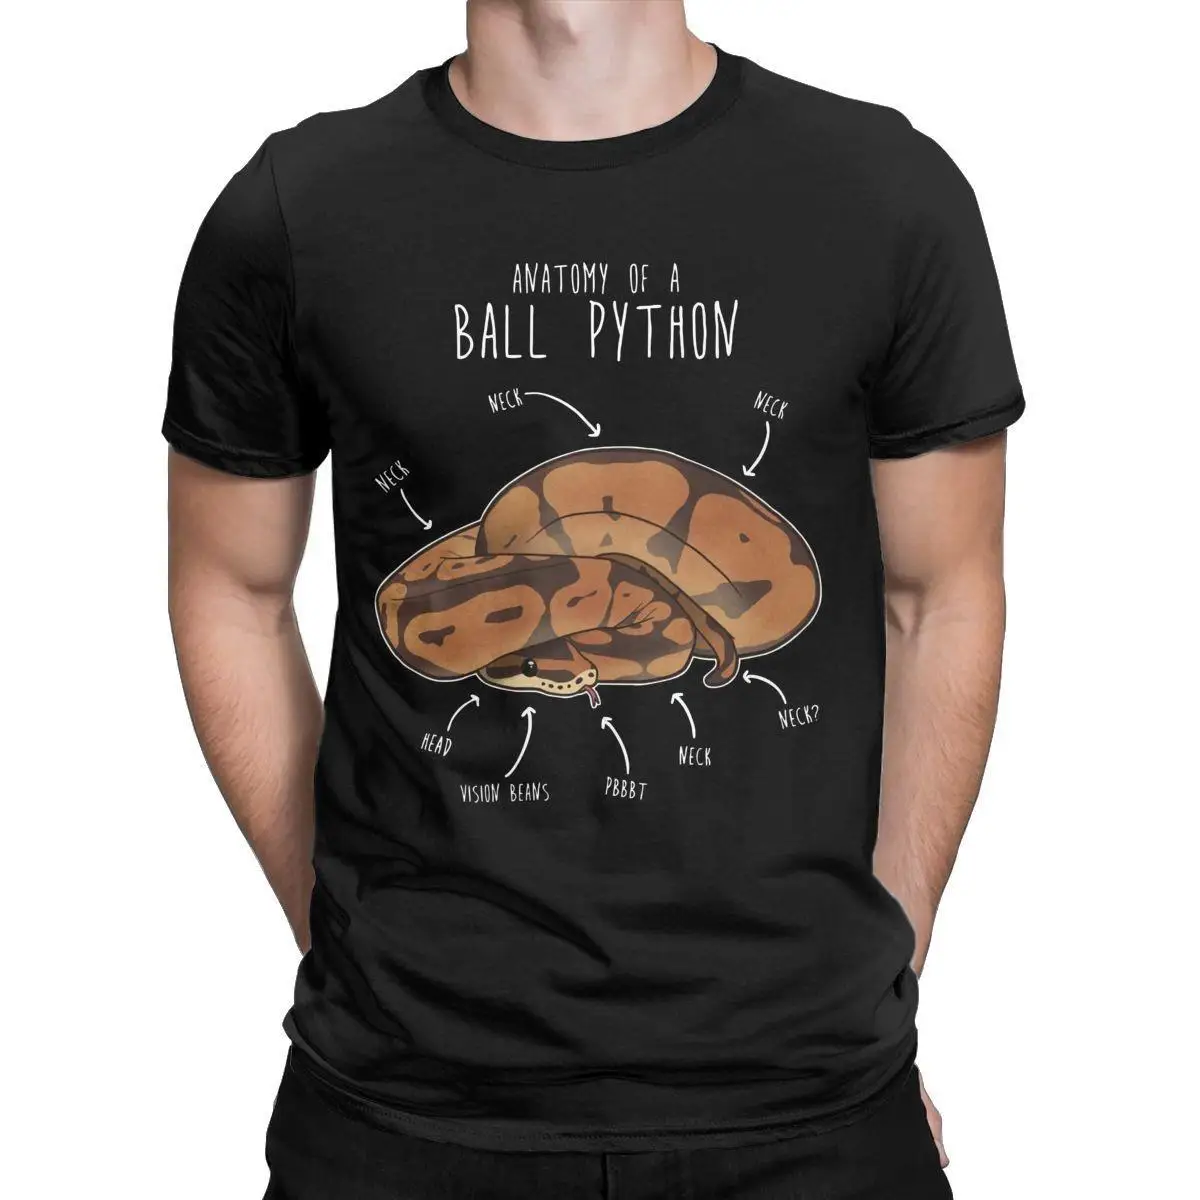 Men T-Shirts Anatomy Of A Ball Python Novelty Cotton Tees Short Sleeve Snake Reptile T Shirt Crew Neck Clothing Plus Size